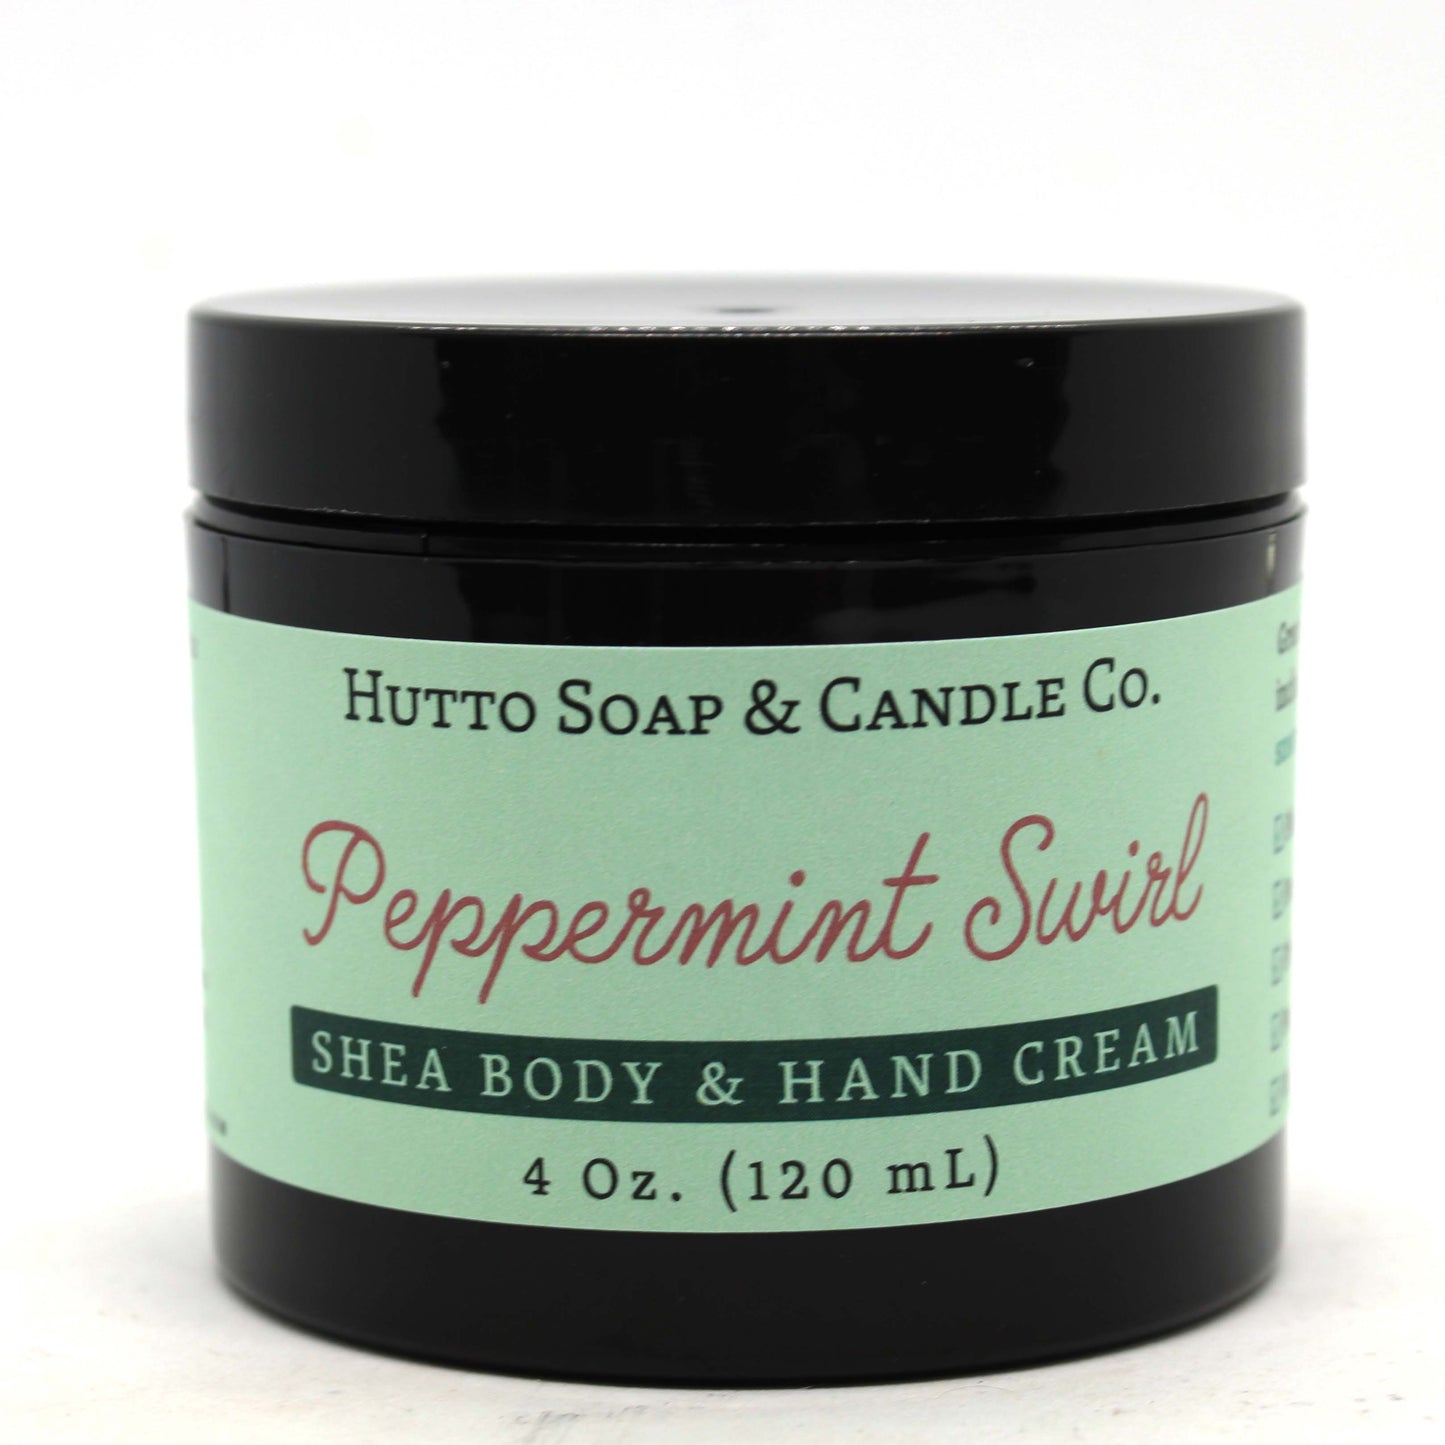 Peppermint Swirl Shea Body & Hand Cream